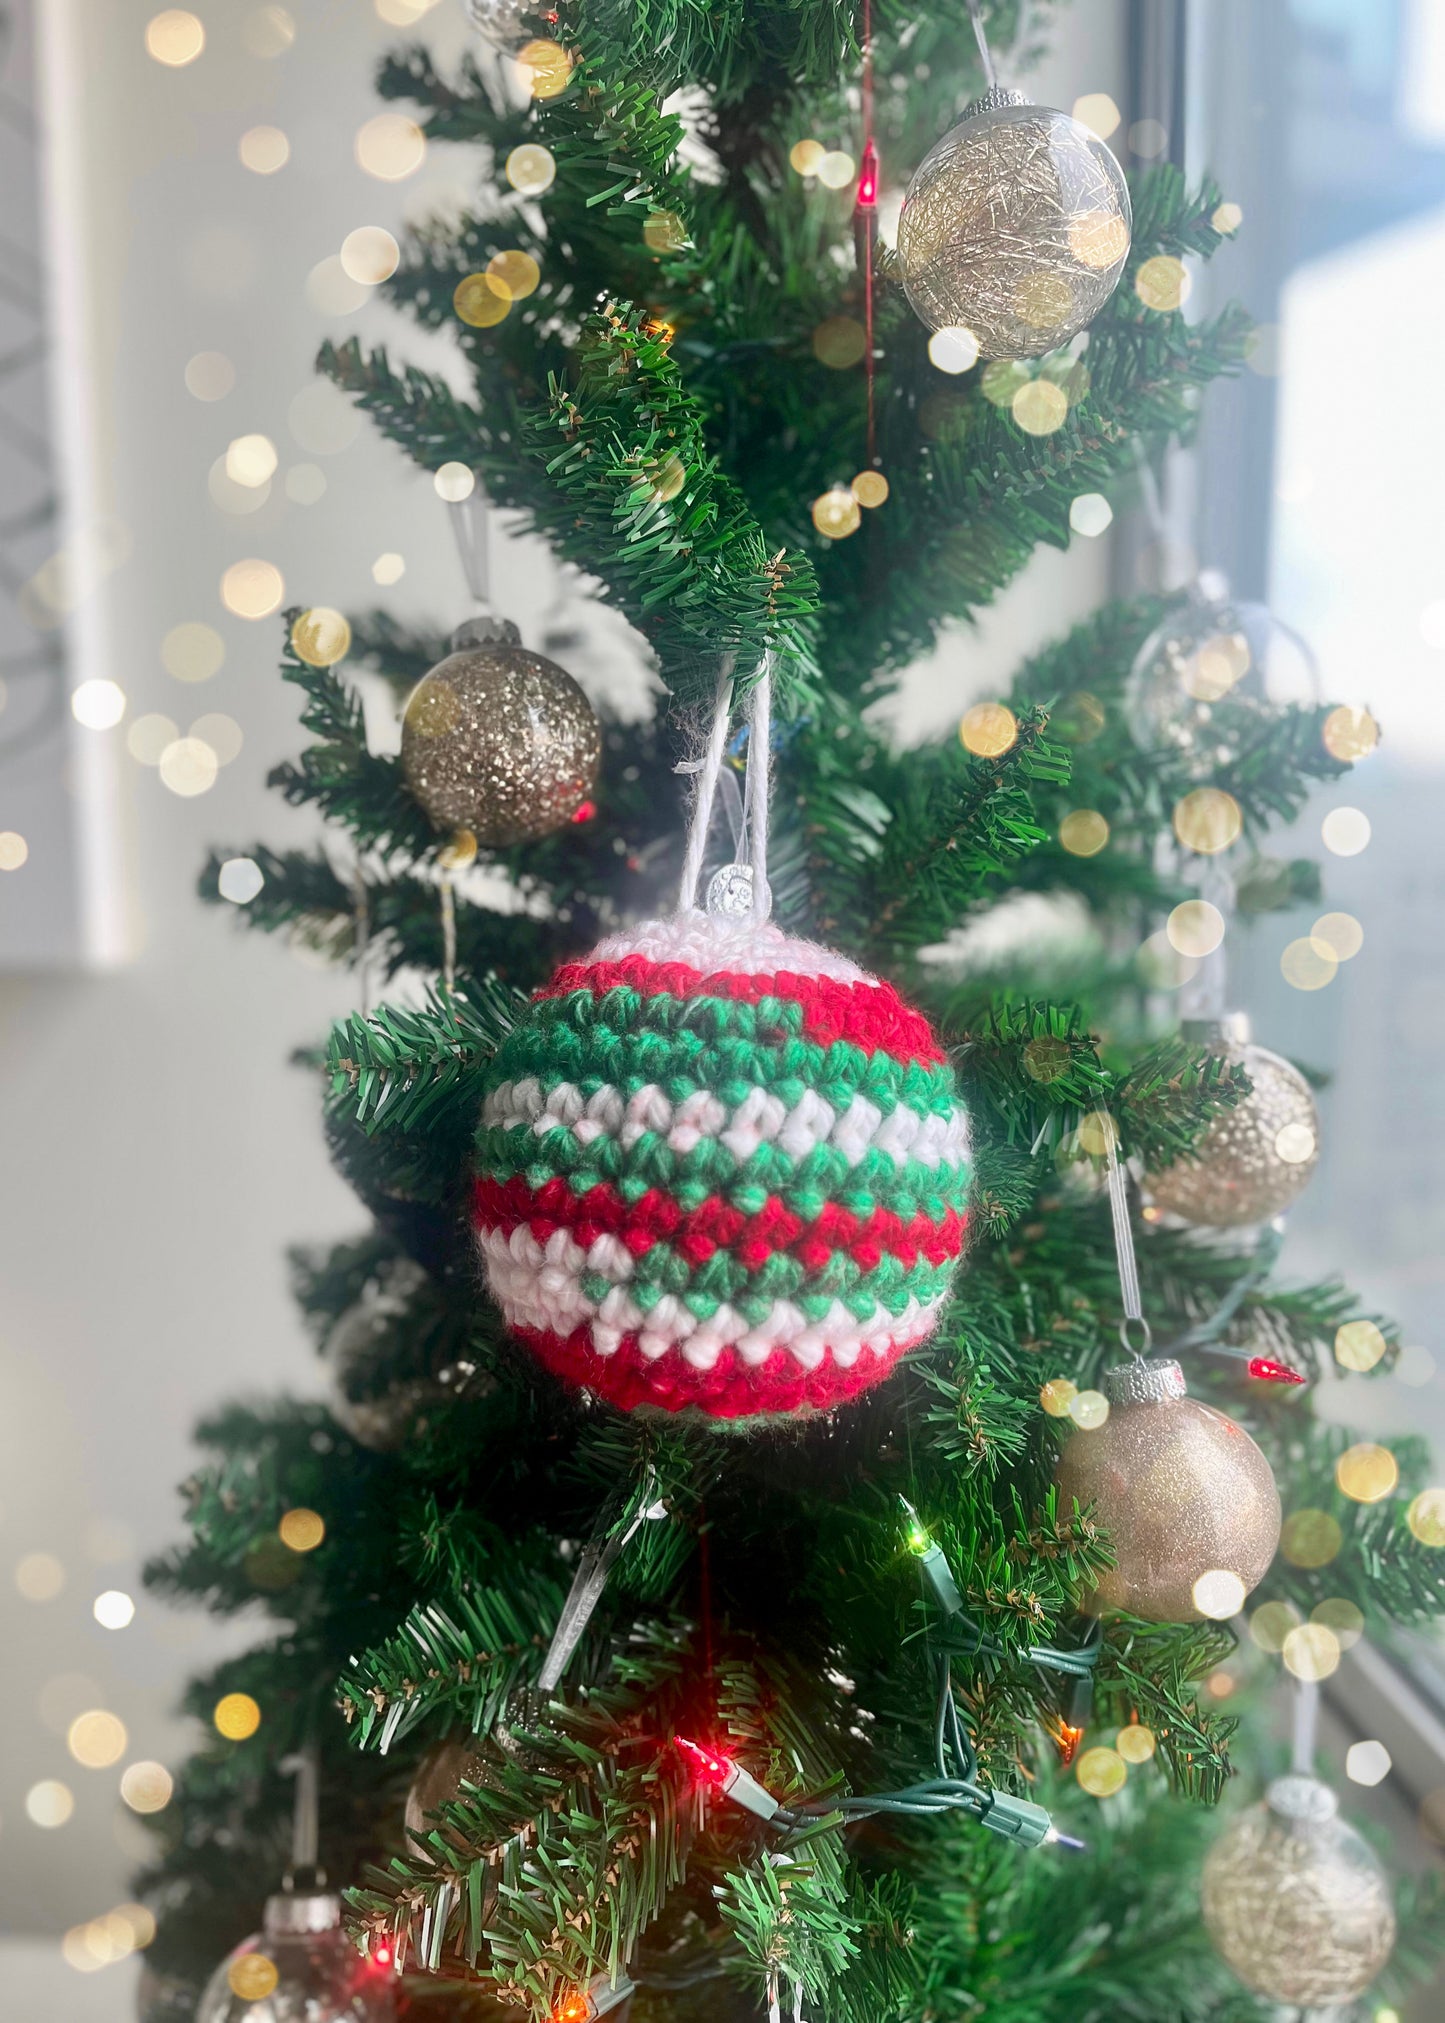 Giant Christmas Bauble Crochet Pattern